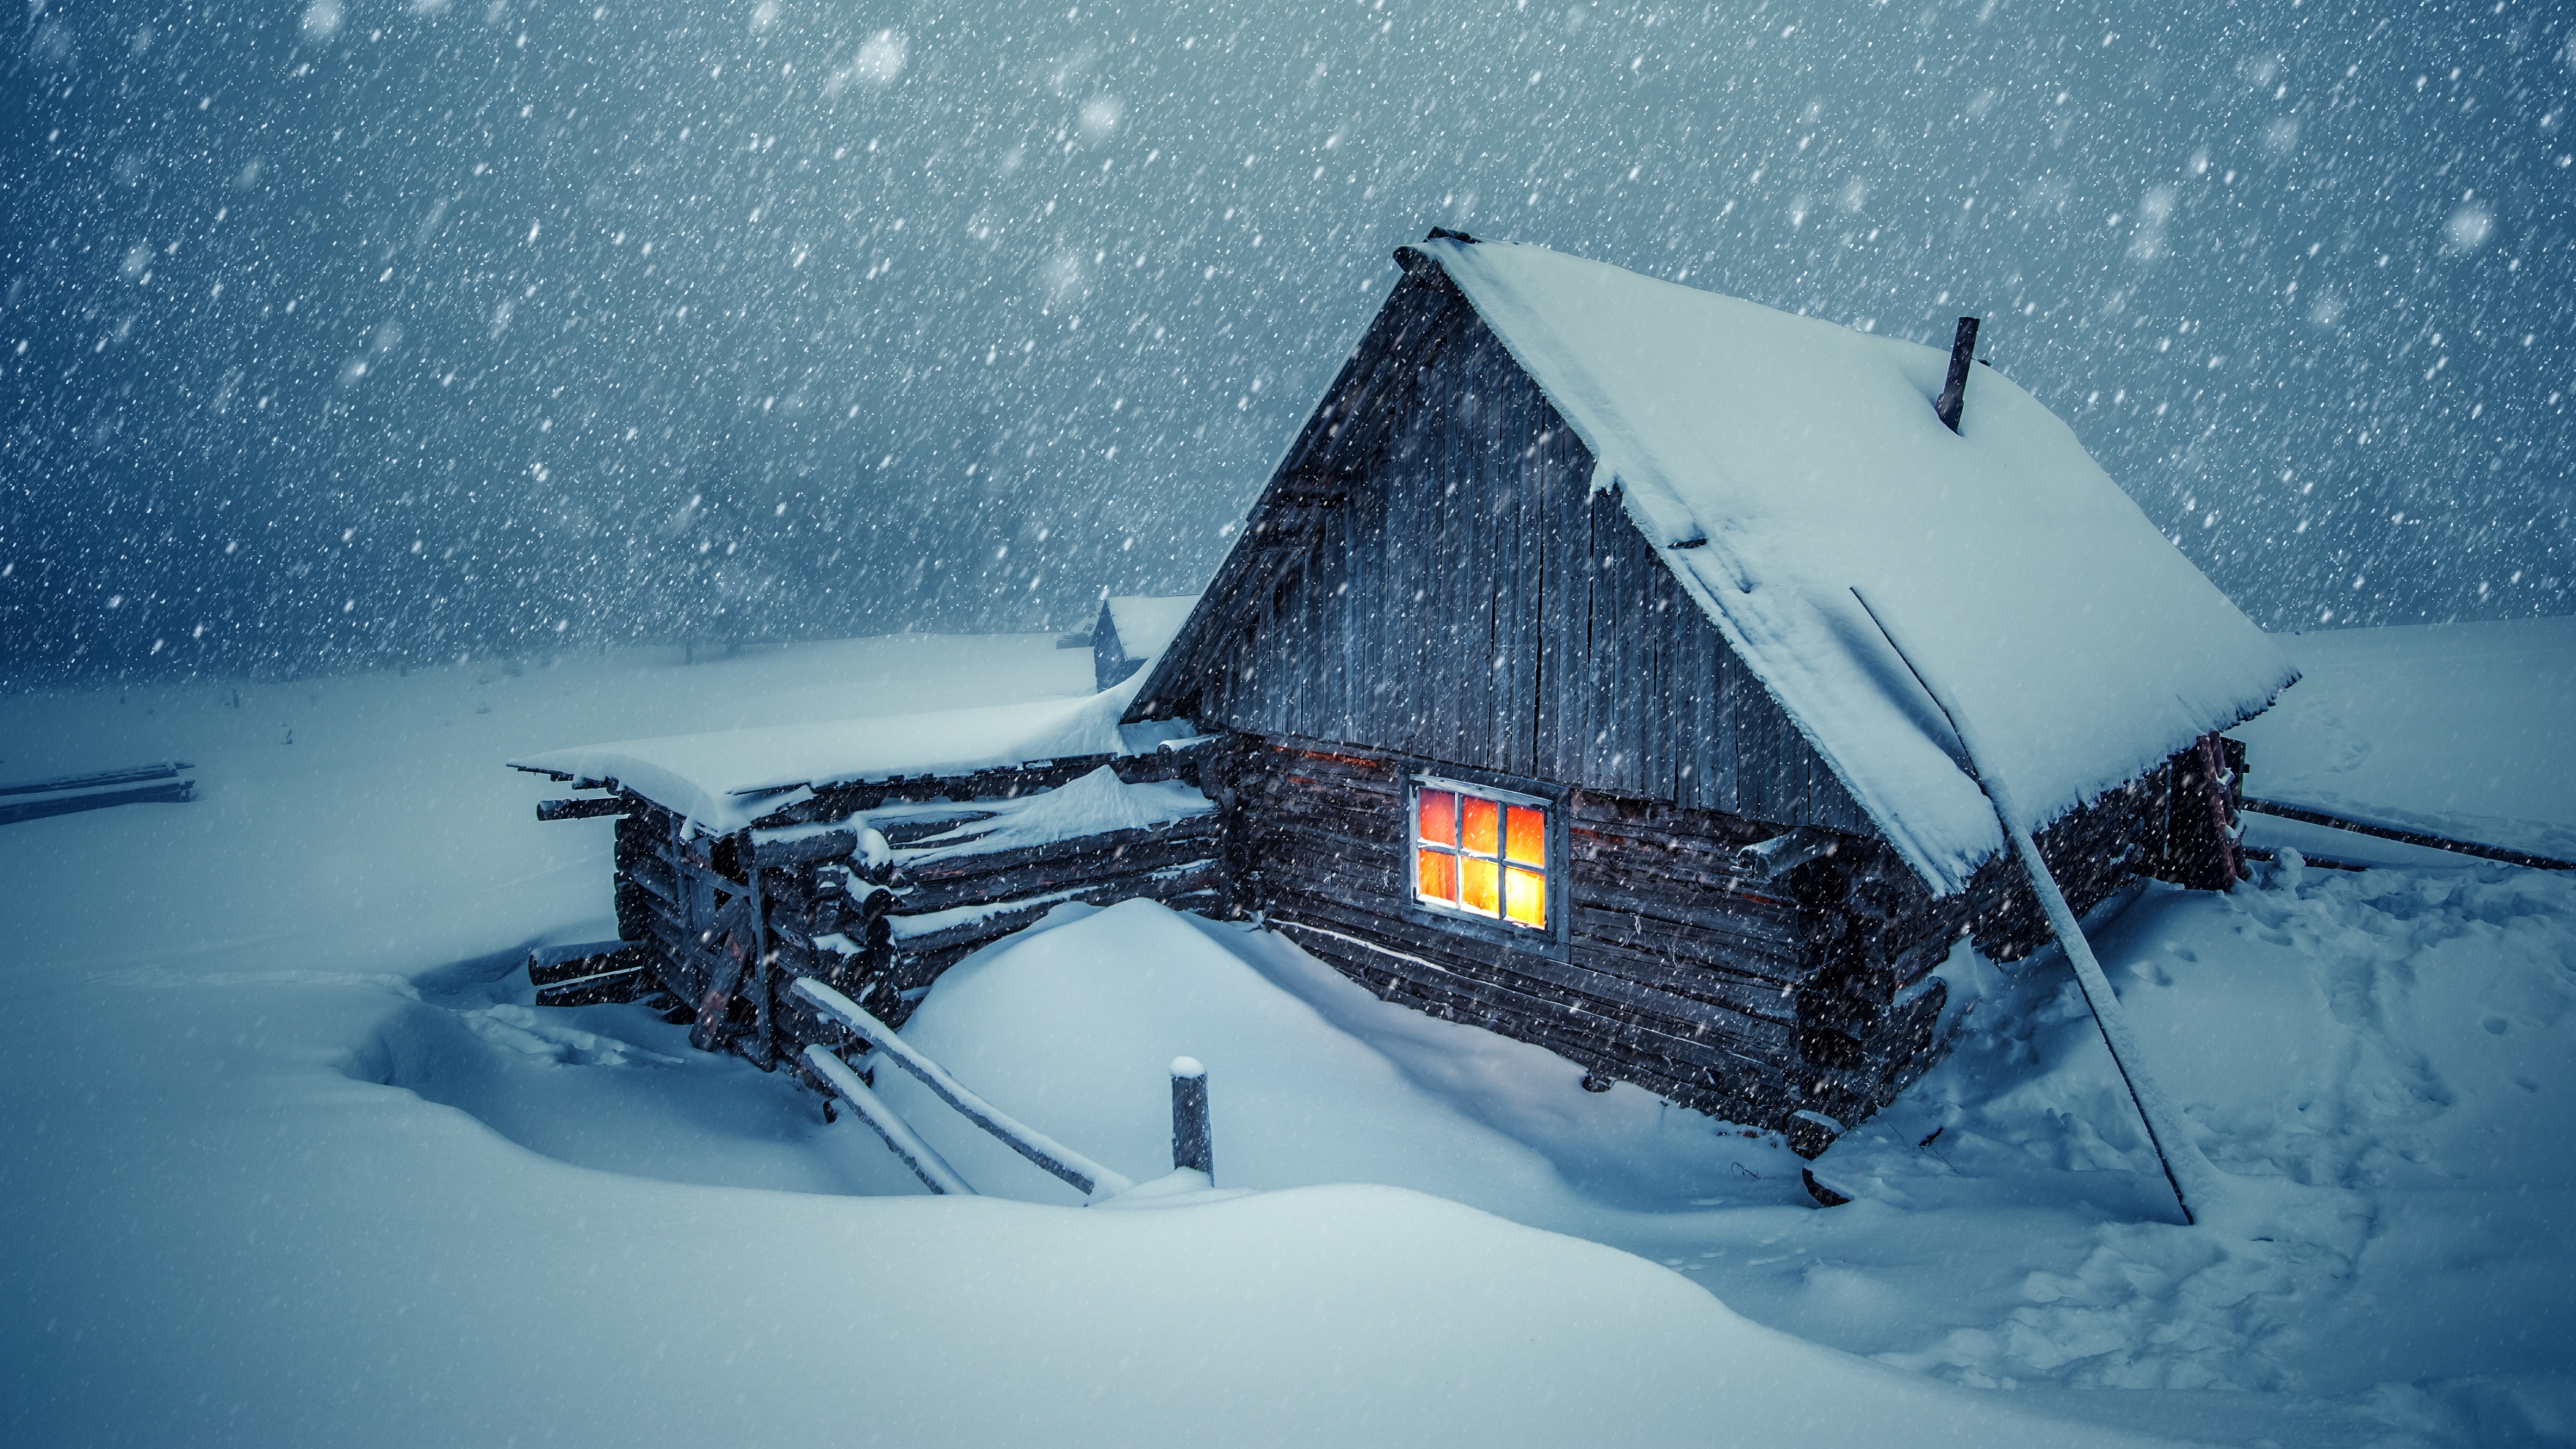 General 3840x2160 landscape winter snow evening house cabin snowing lights